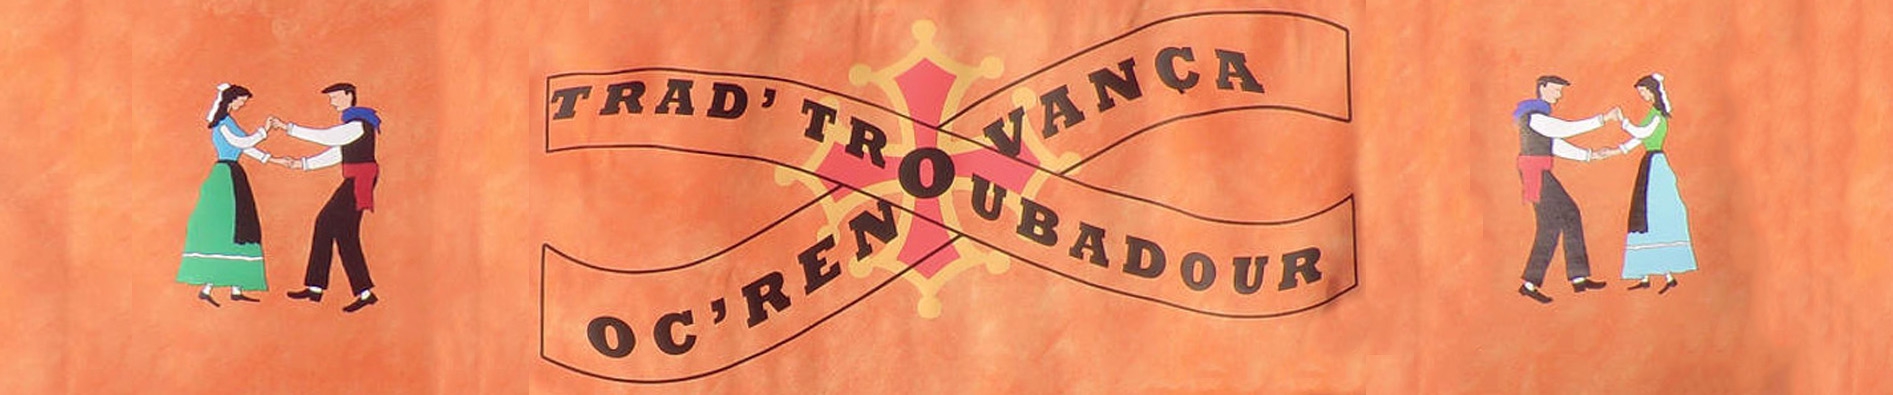 Groupe folklorique Oc'renovença & Tradtroubadours